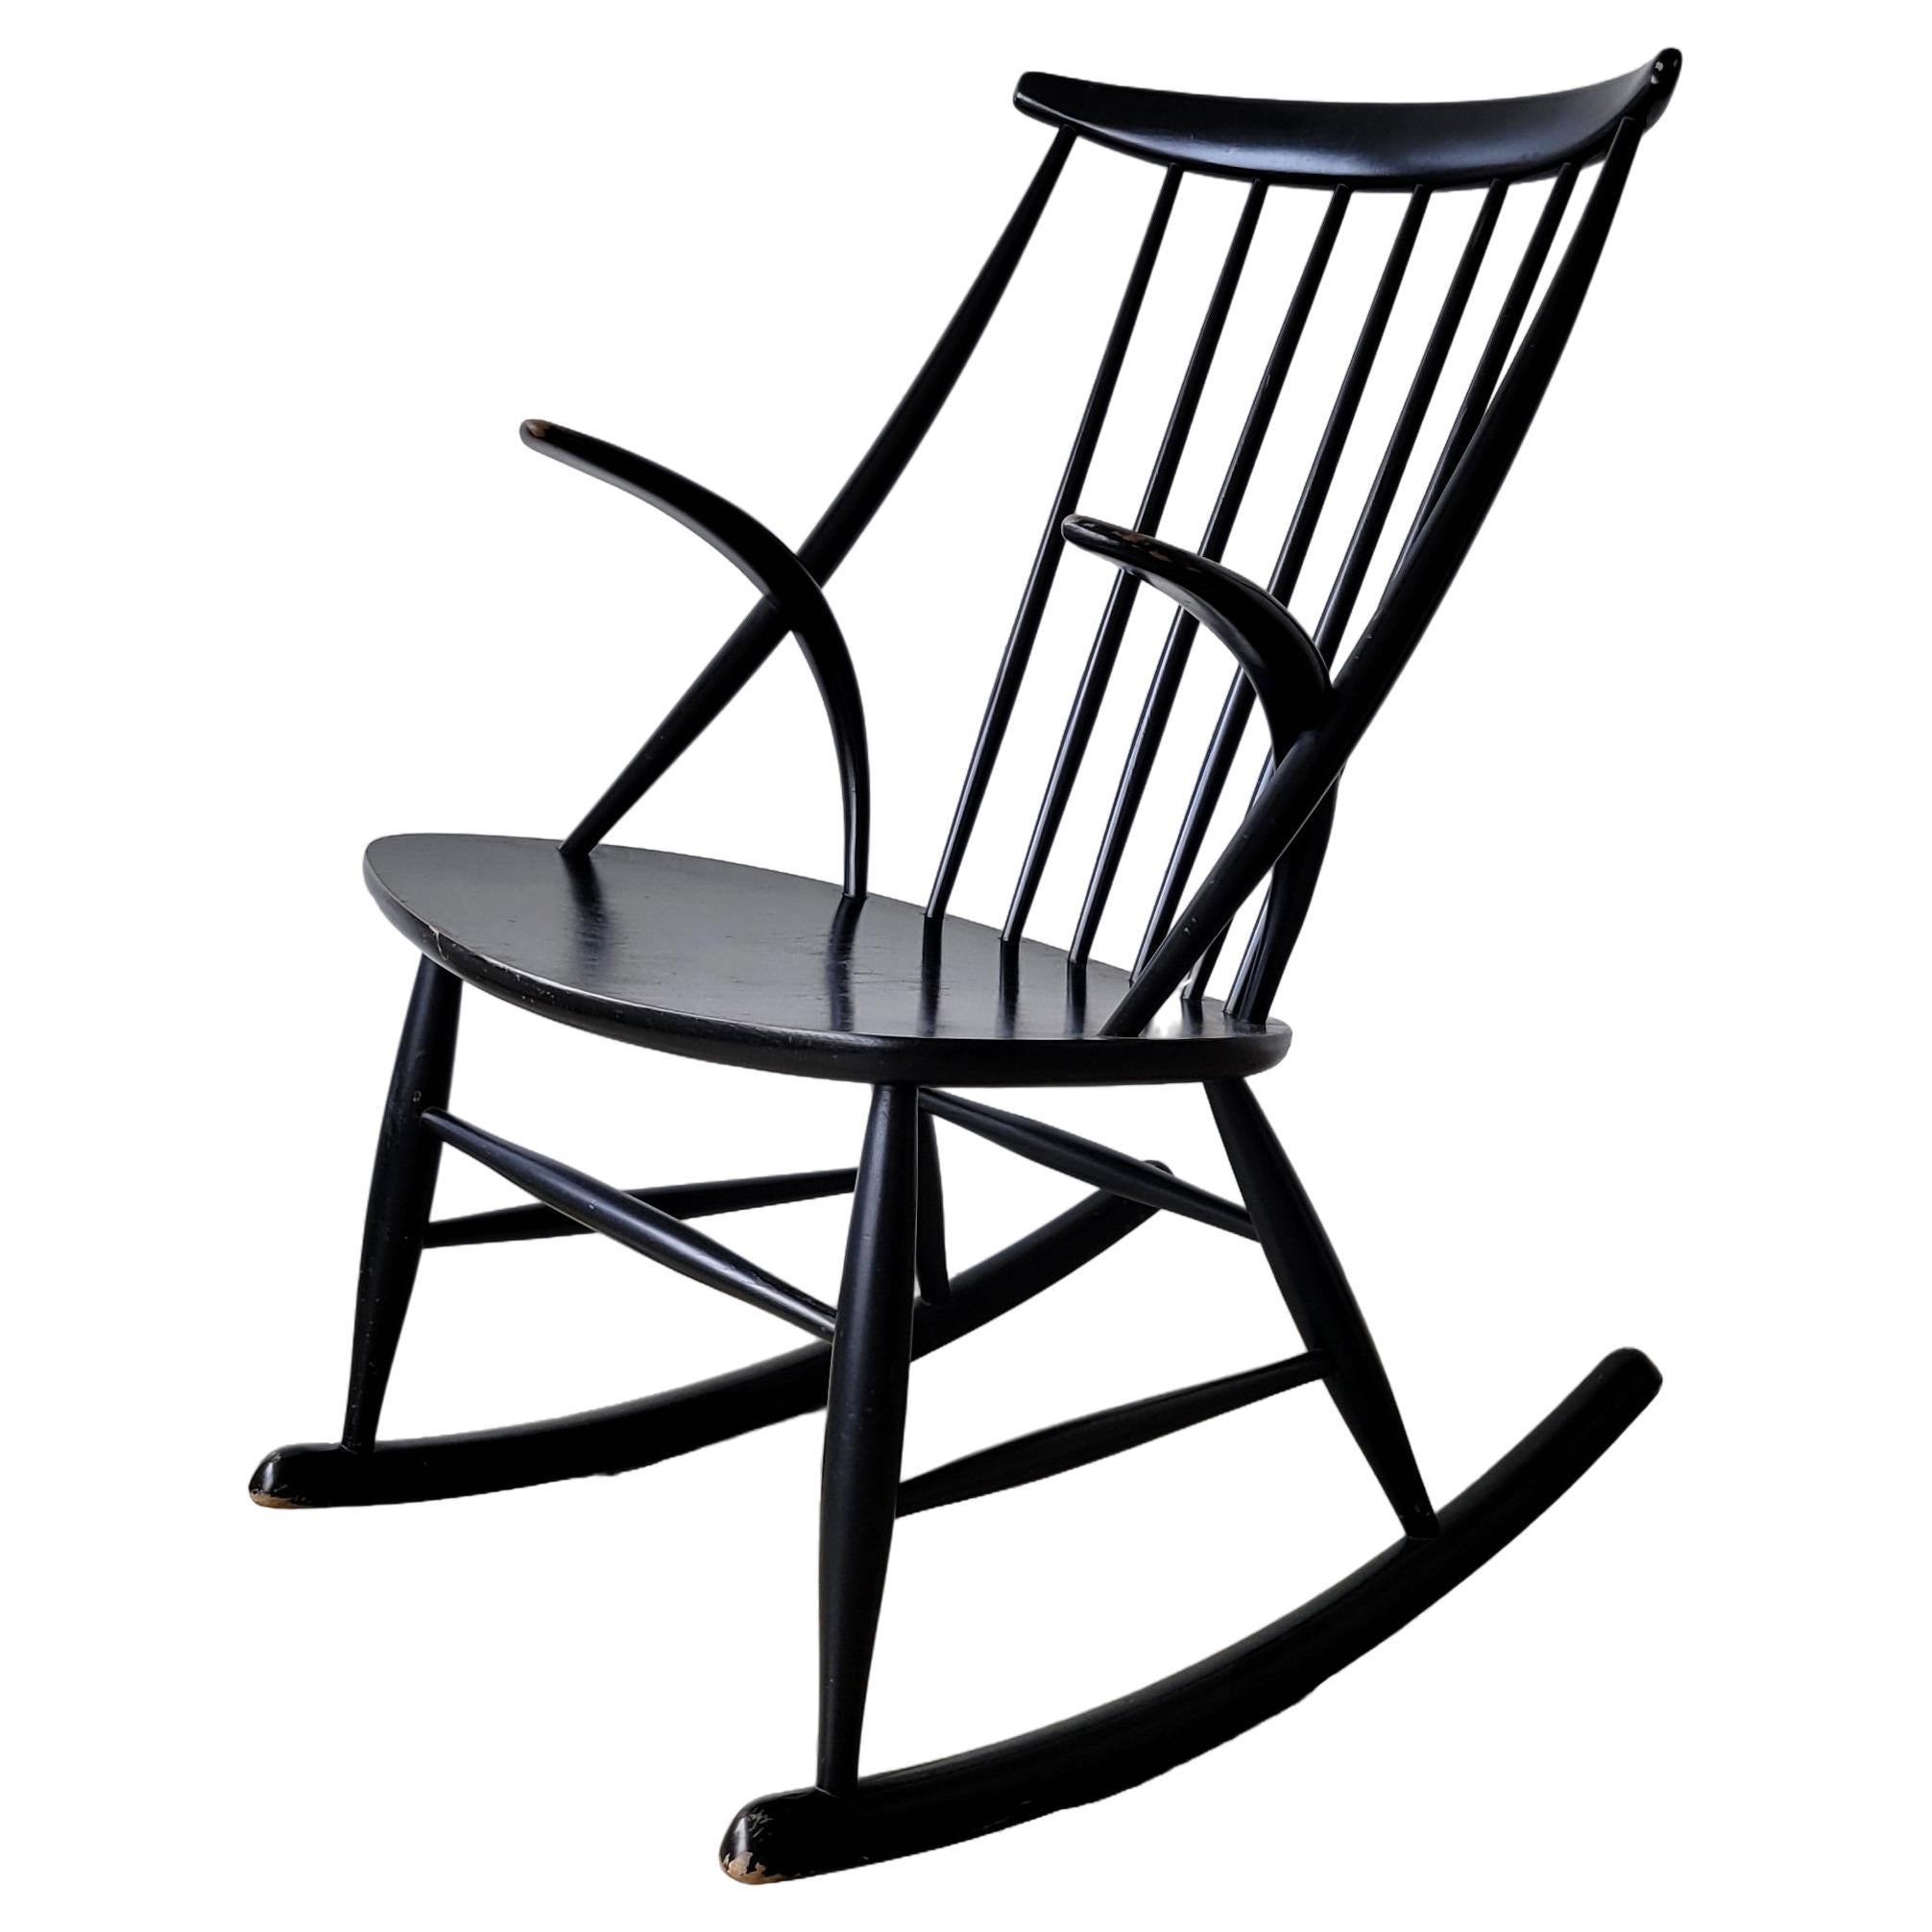 Illum Wikkelsø for Niels Eilersen Black Rocking Chair